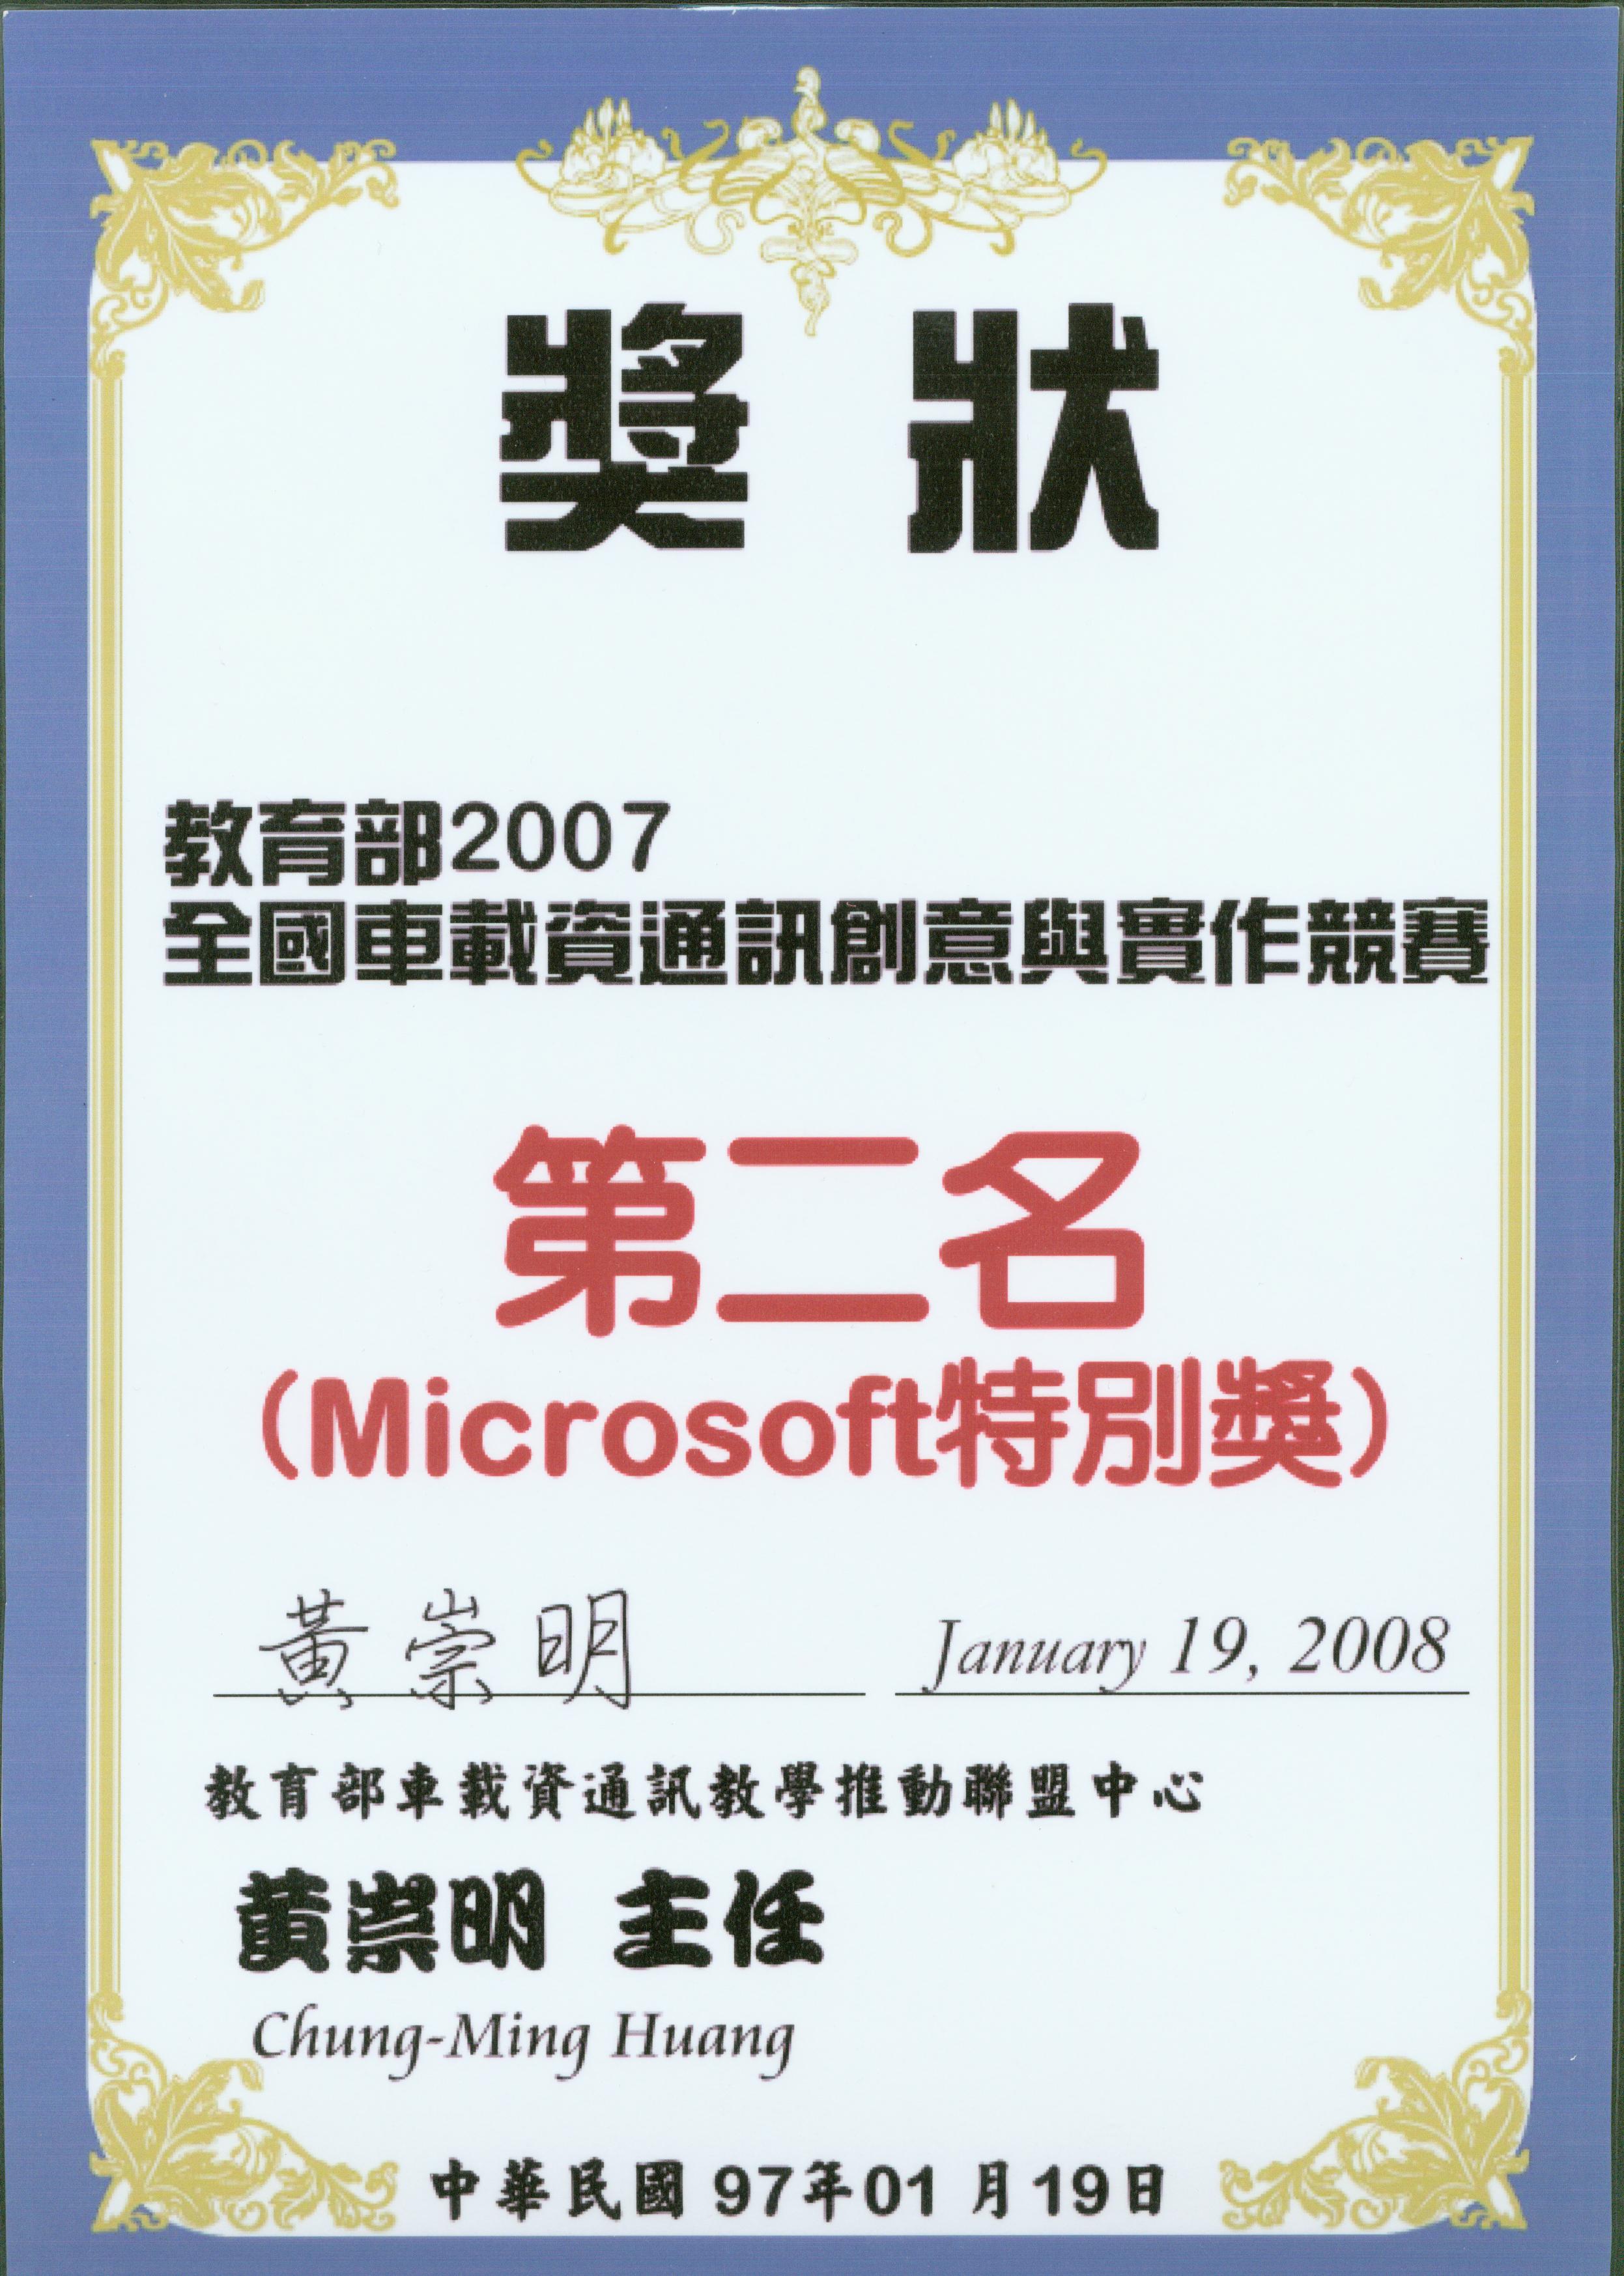 2008=EDU_2007_MS 2nd Award